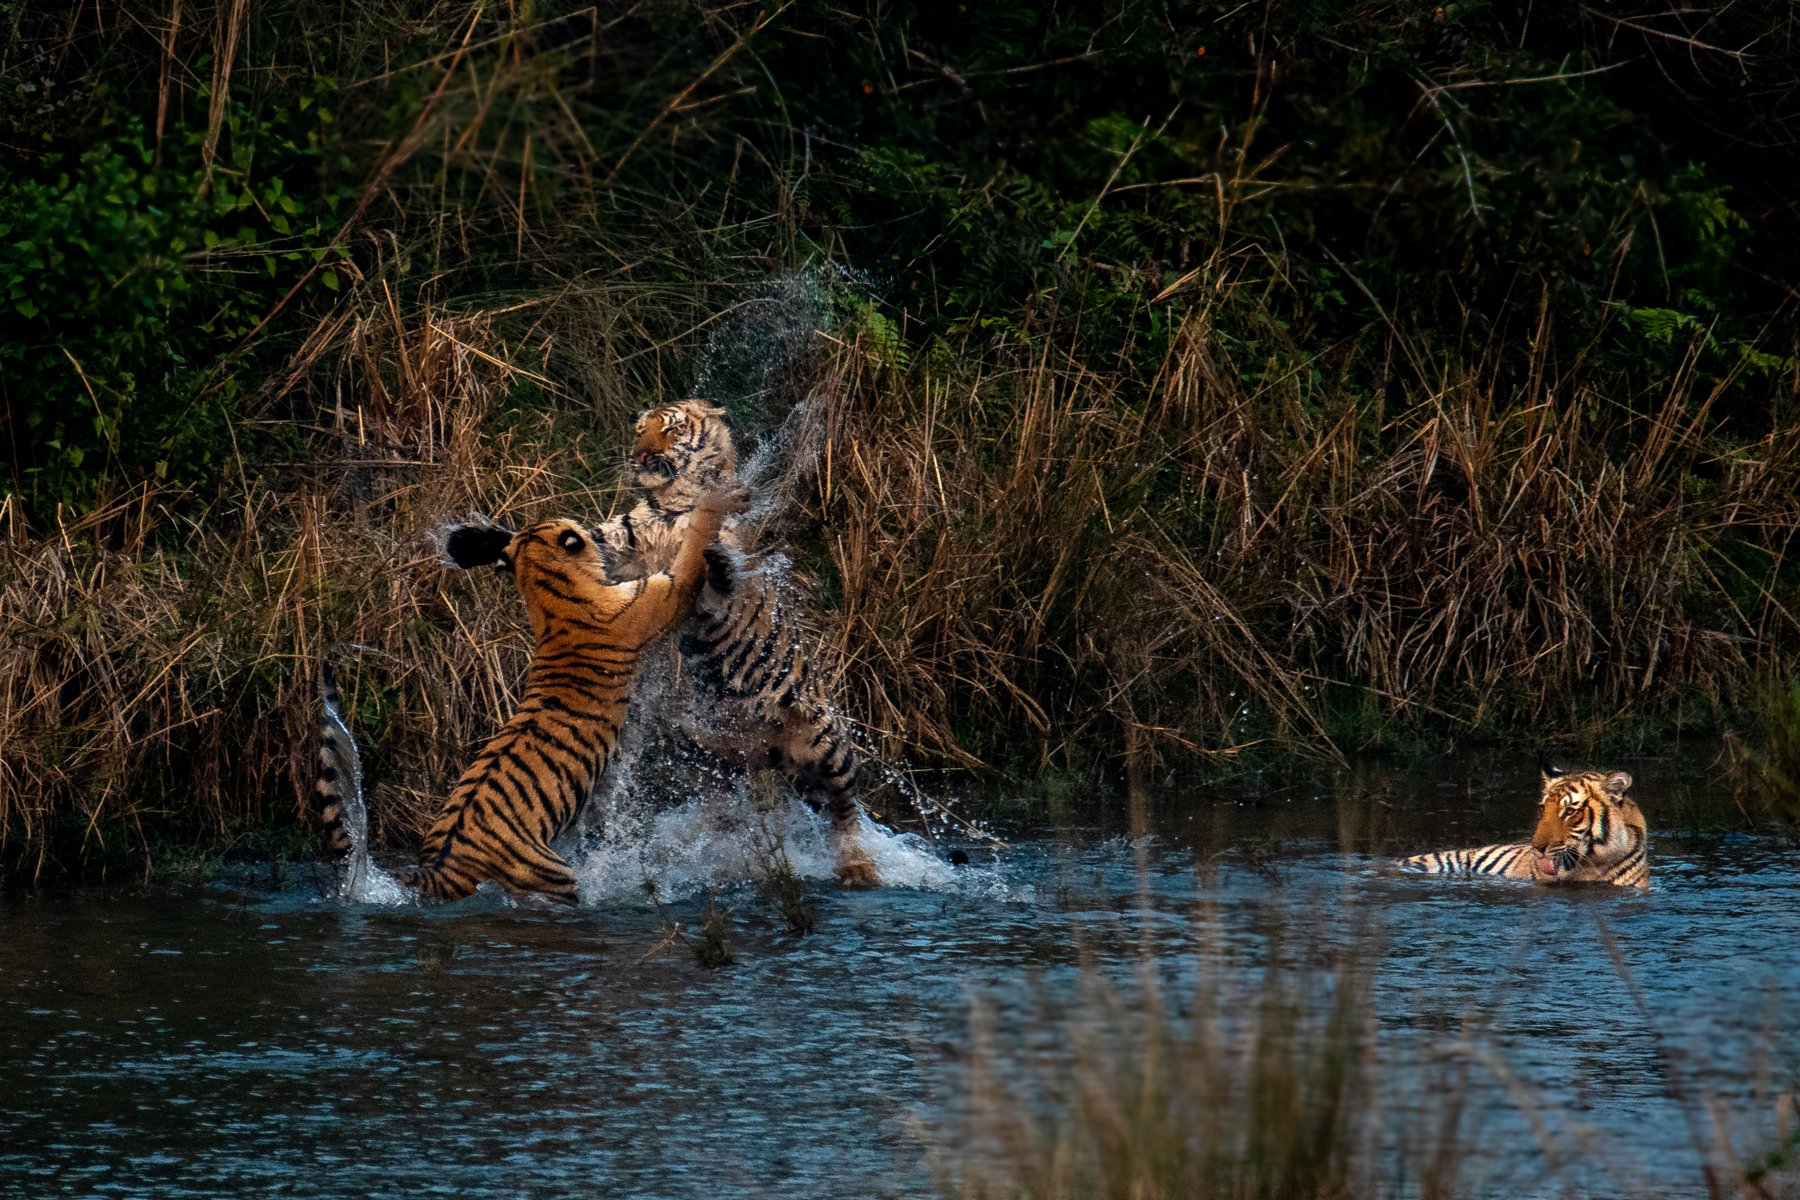 tiger tigress cubs subadult corbett india jump playfight fight play action drinking water, Nabarun Majumdar